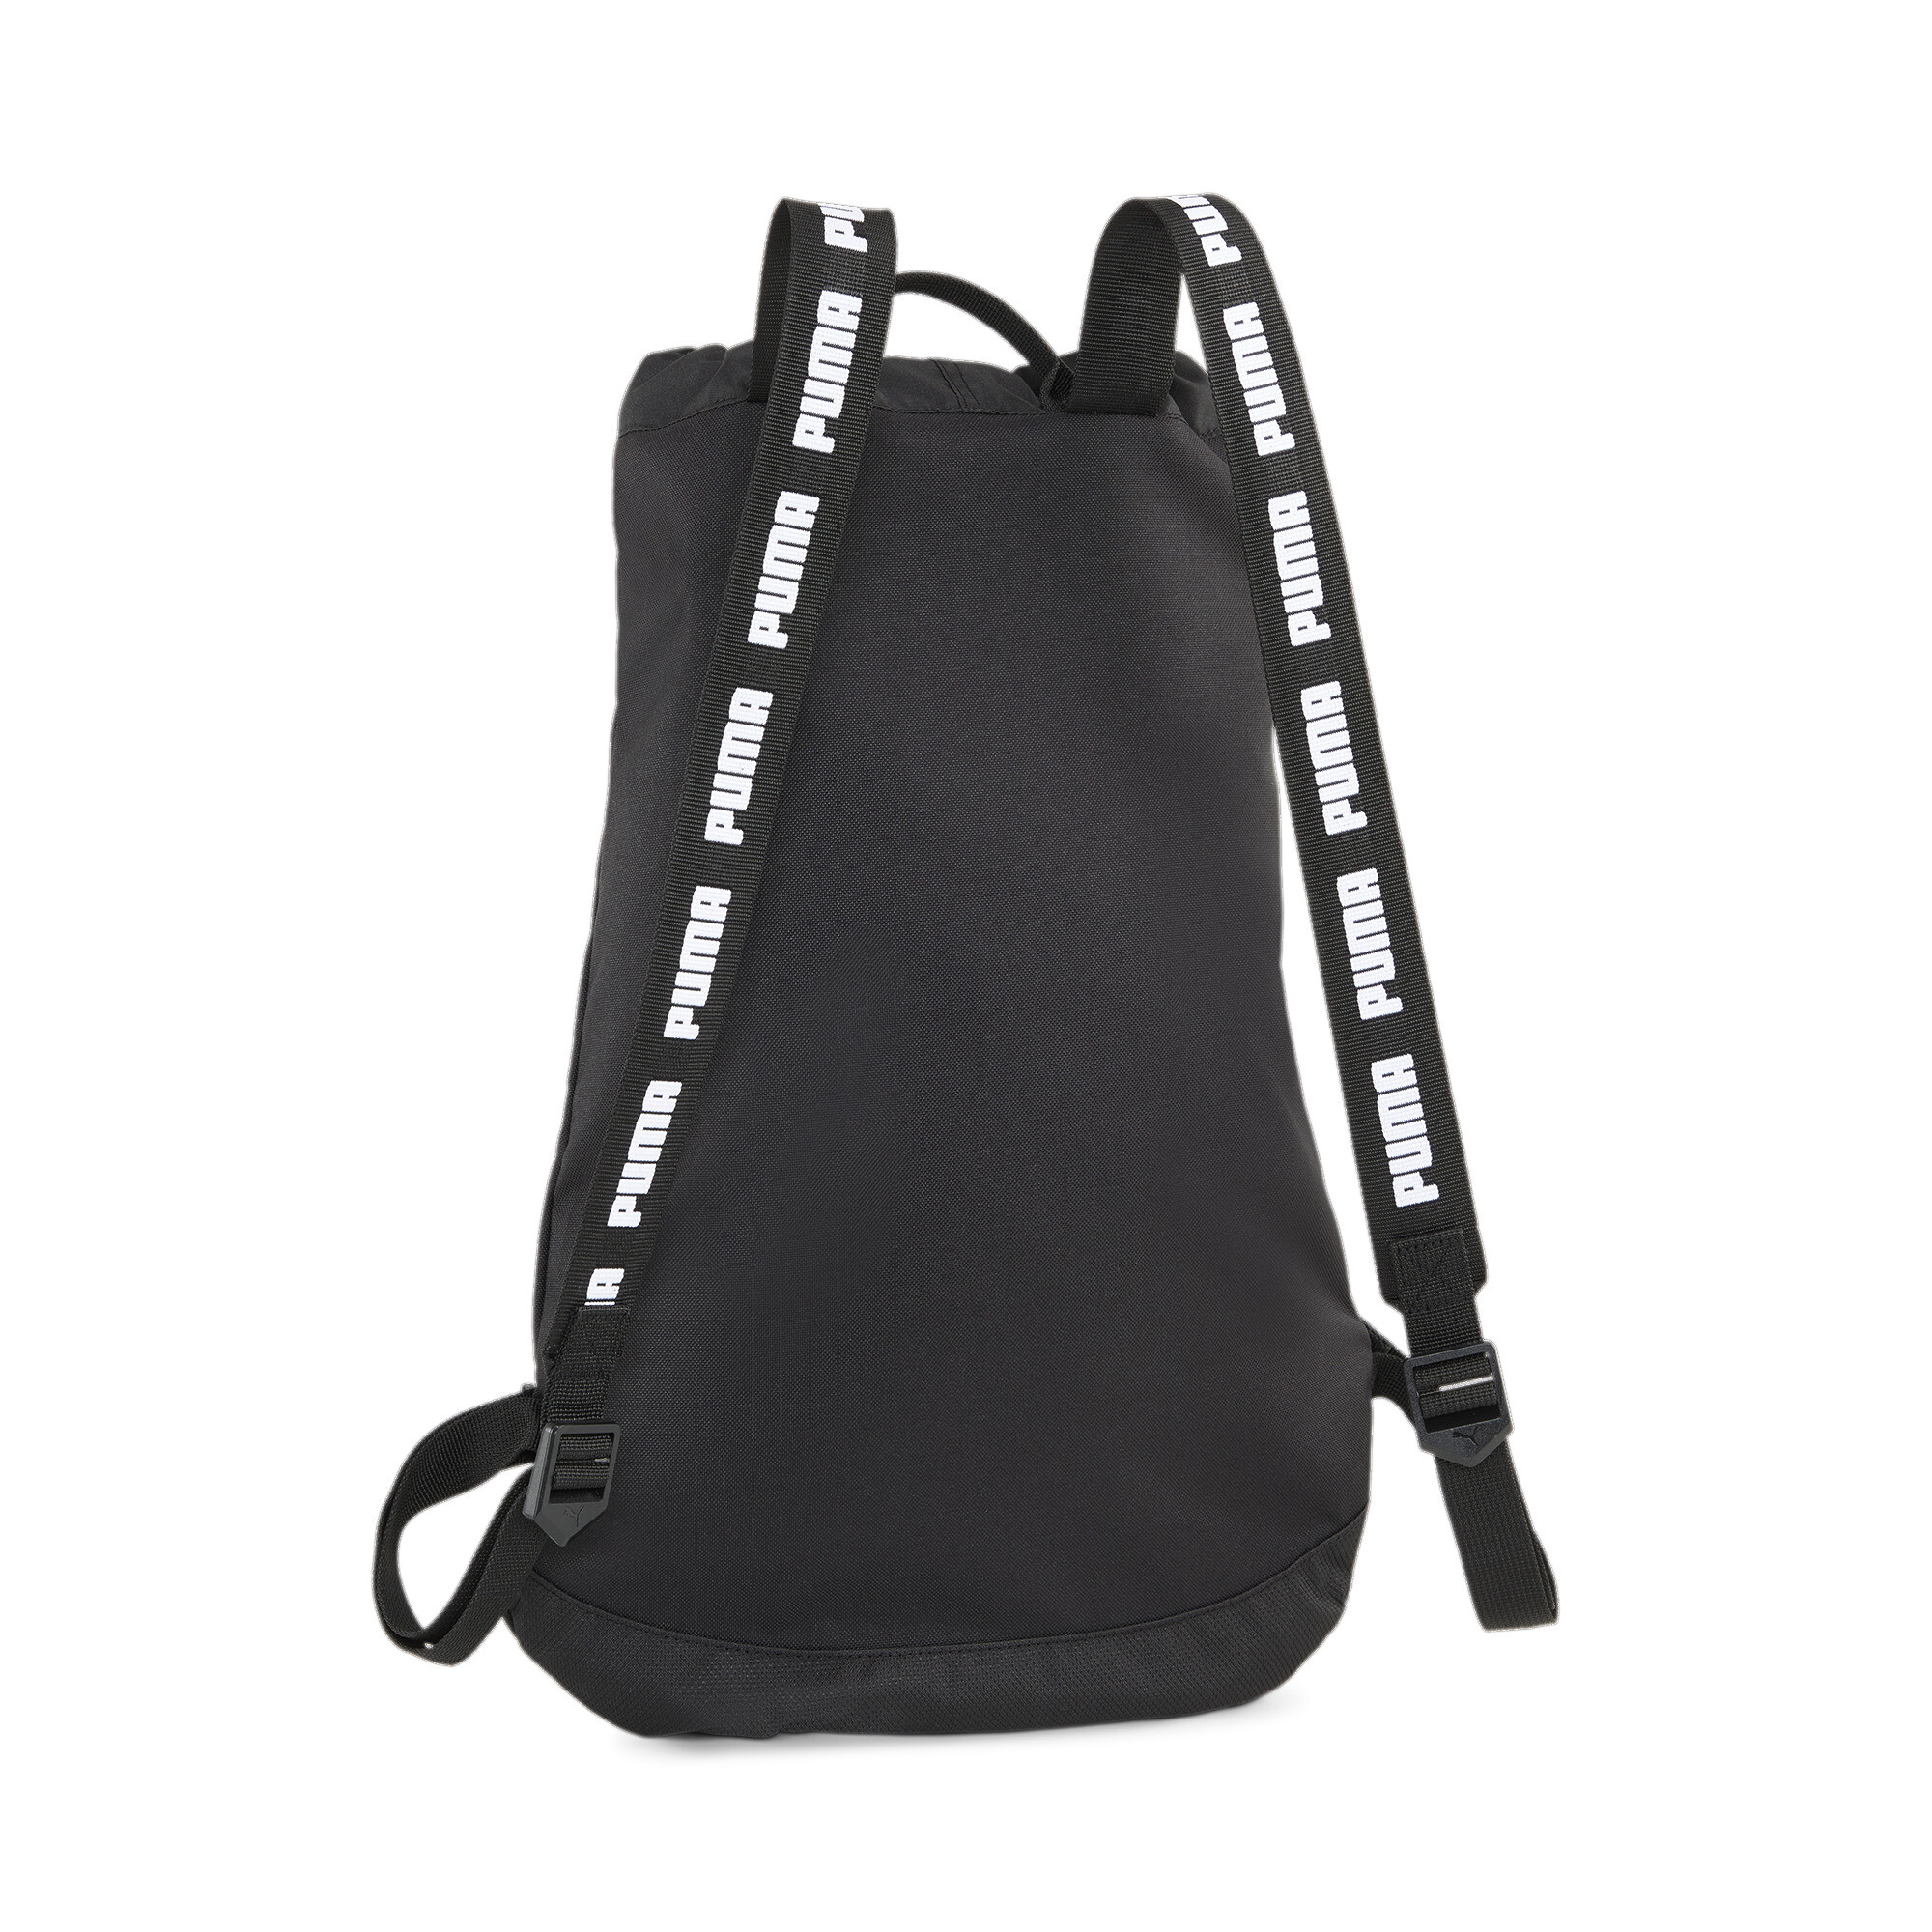 Puma Evo ESS Smart Bag, Black, Accessories